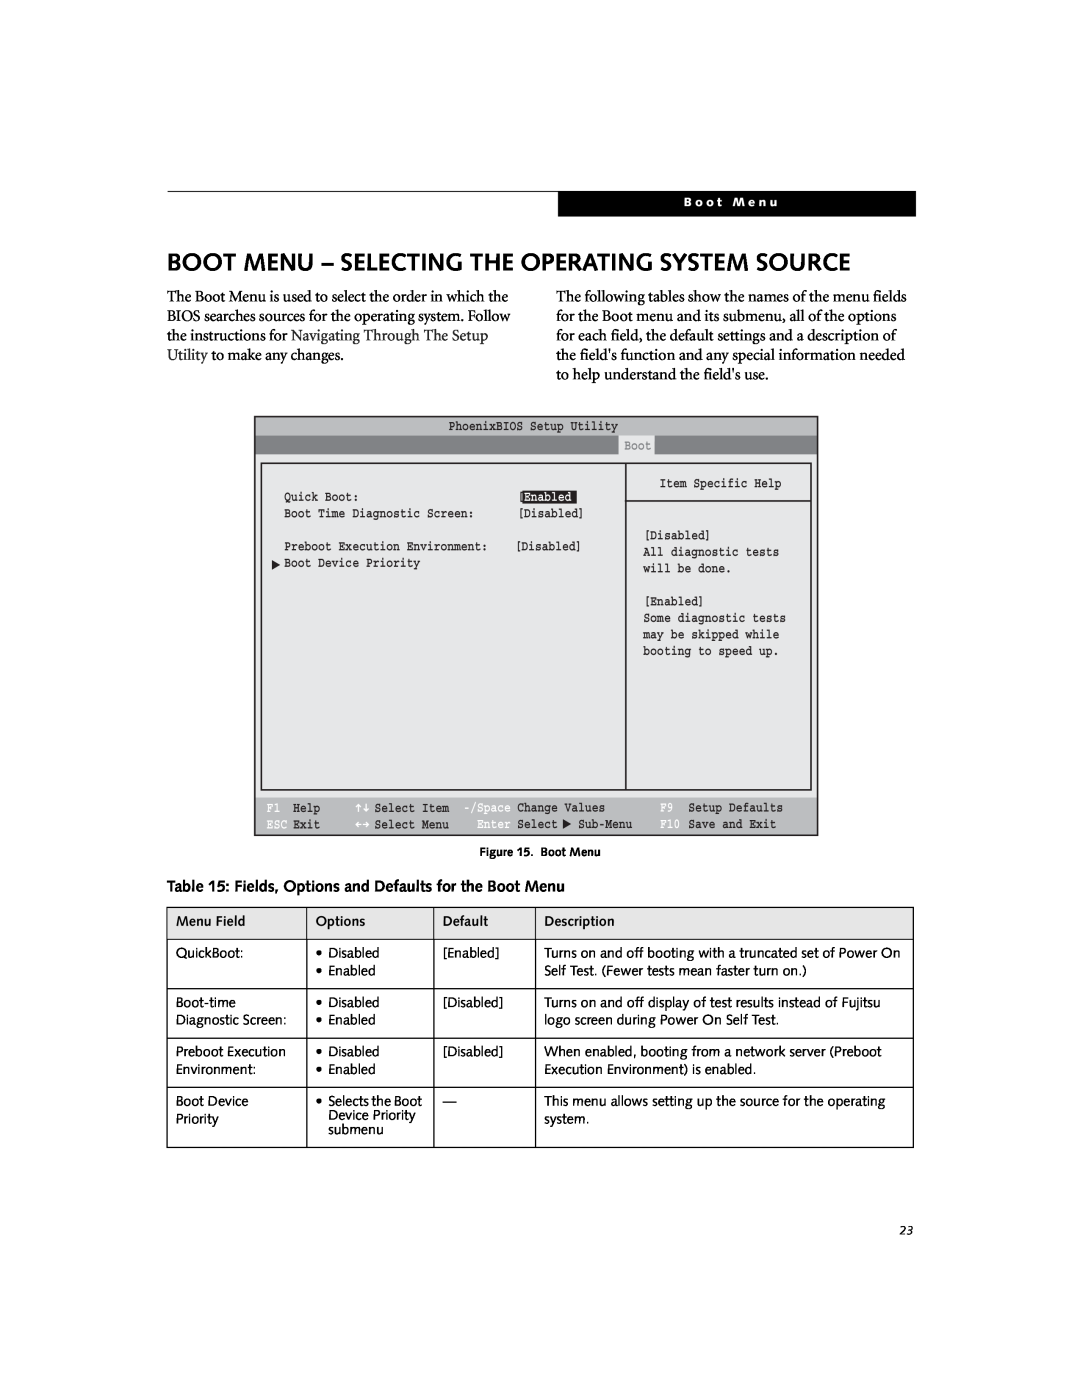 Fujitsu Siemens Computers B3000 manual Boot Menu - Selecting The Operating System Source 